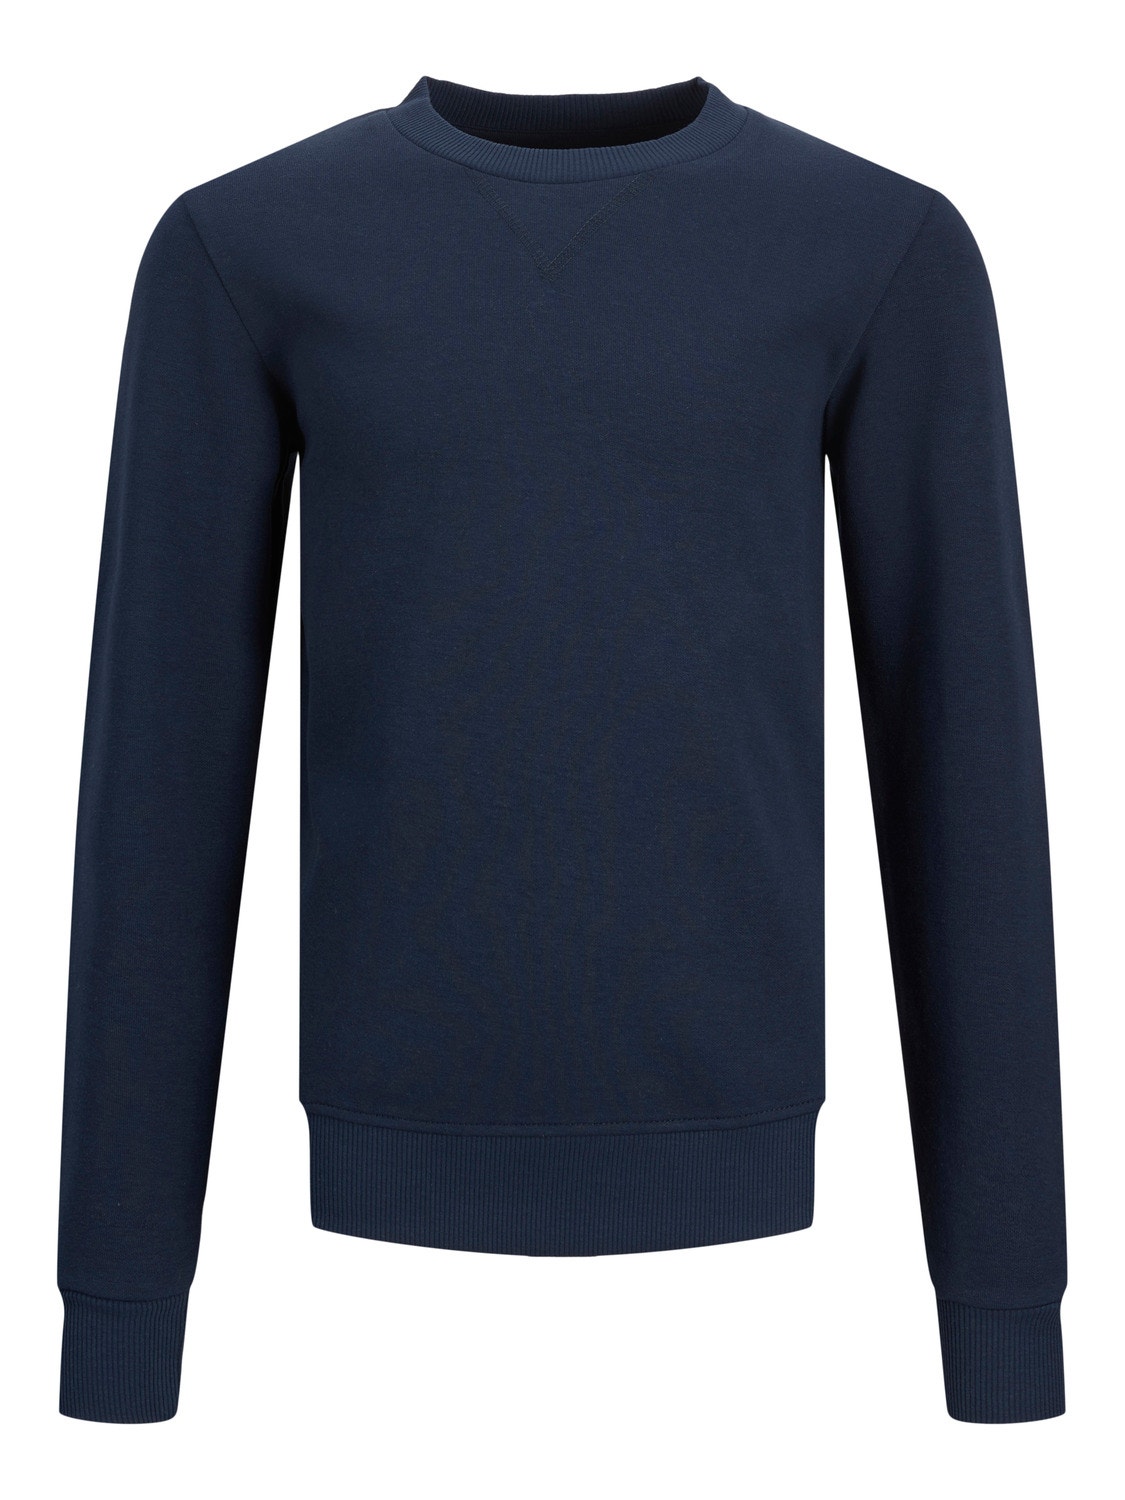 Jack & Jones Plain Crew neck Sweatshirt For boys -Navy Blazer - 12182520